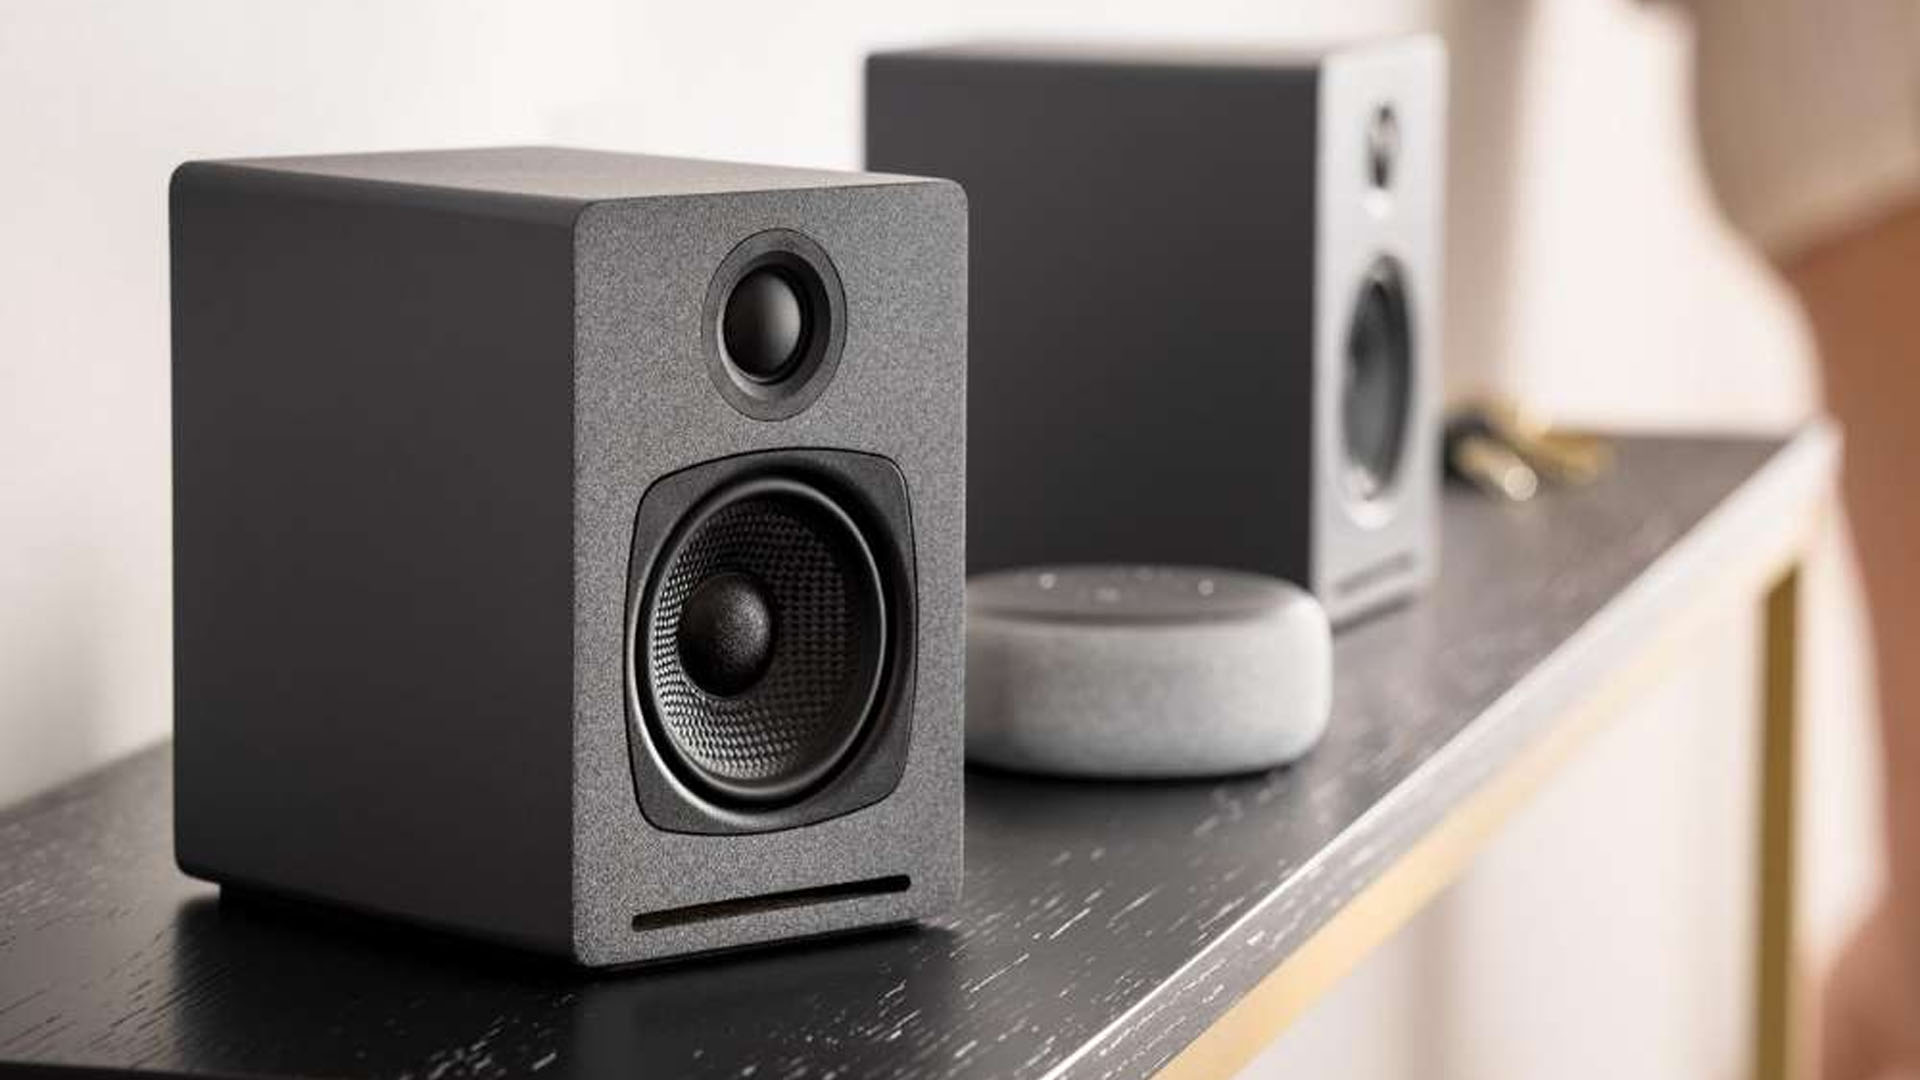 Audioengine A1 speakers next to Google Nest mini smart speaker